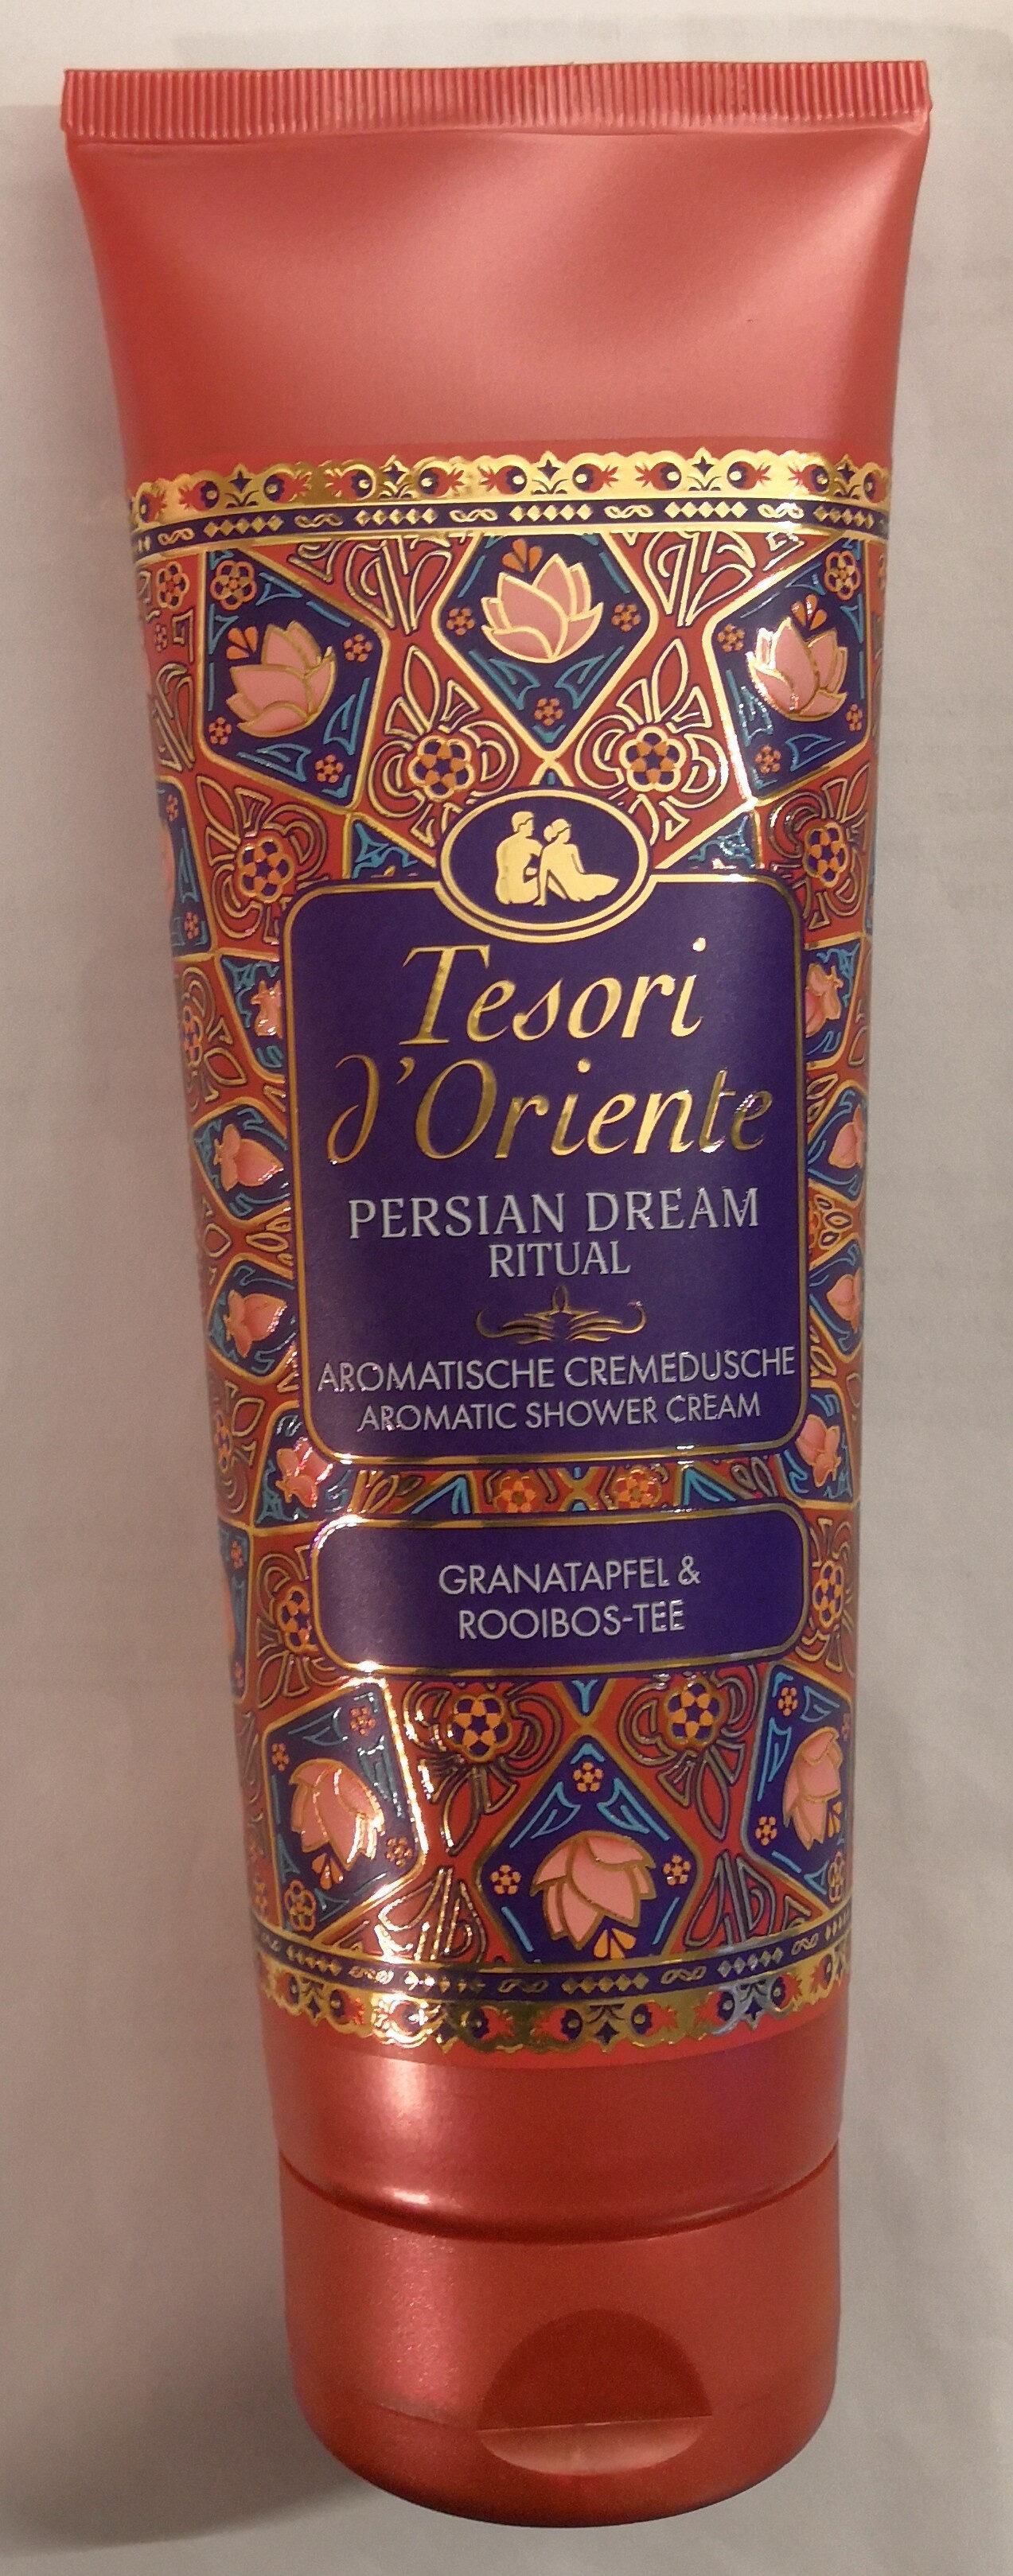 Persian Dream Ritual Granatapfel & Rooibos-Tee - Produkt - de